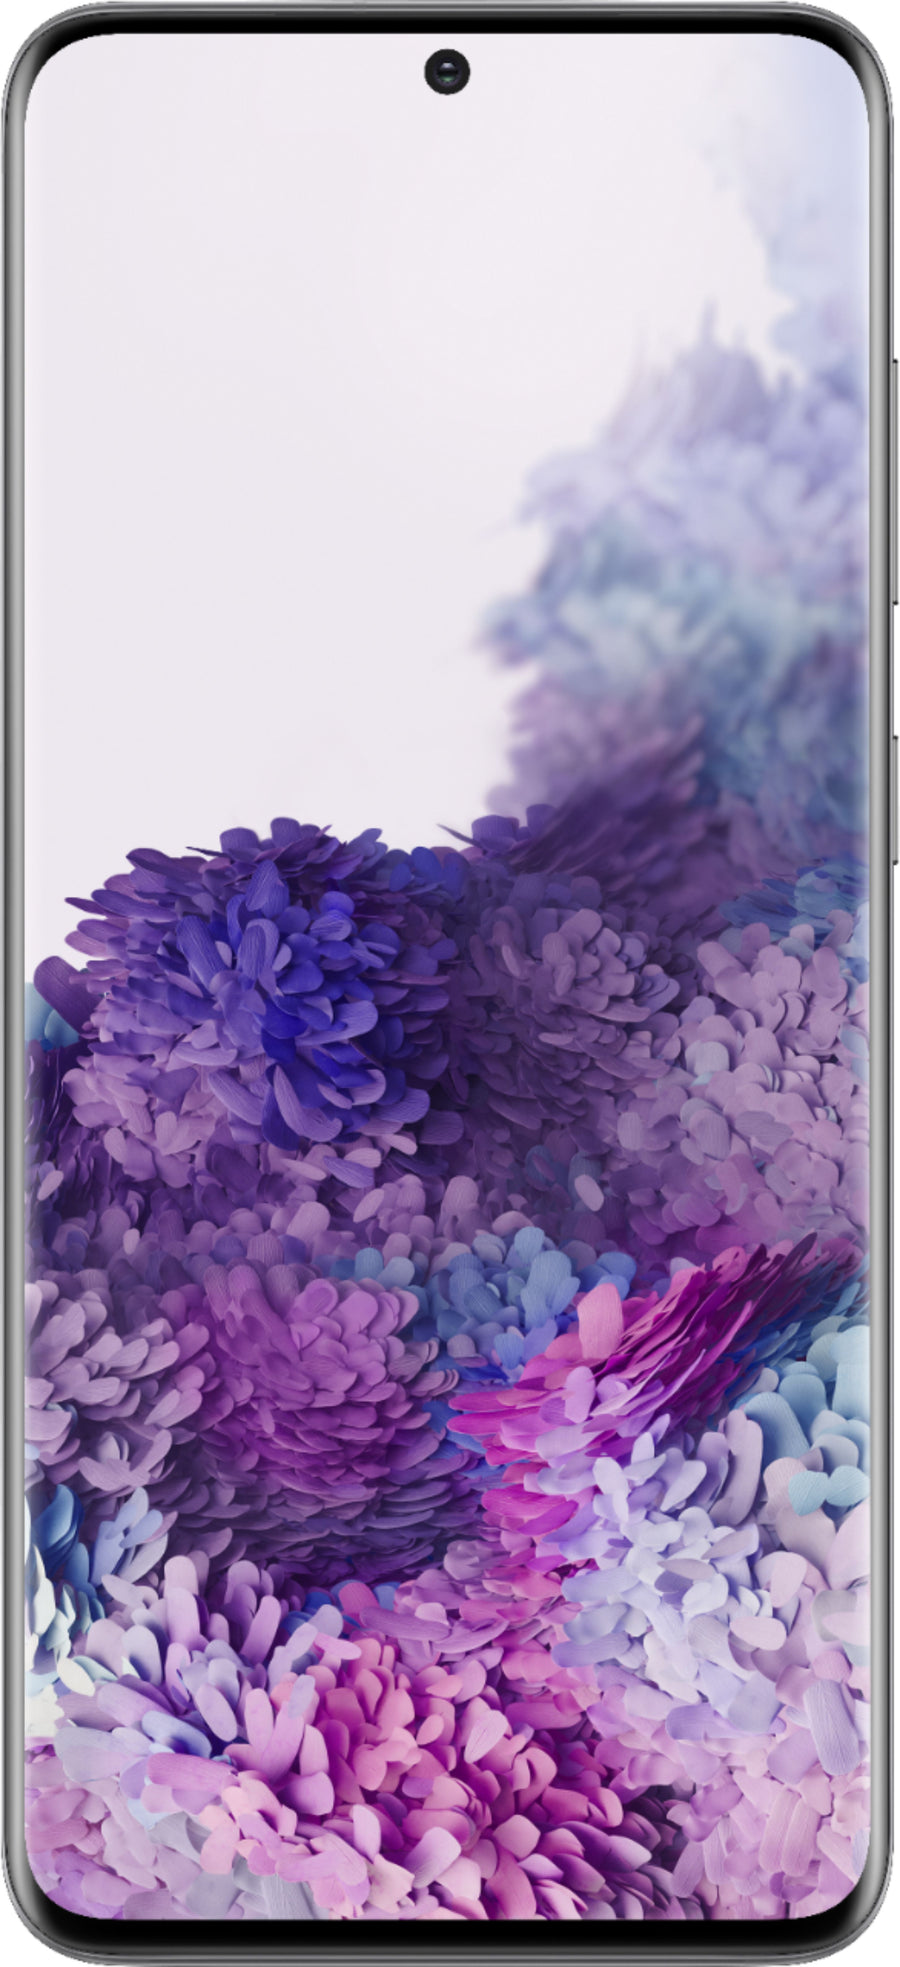 Samsung - Geek Squad Certified Refurbished Galaxy S20 5G Enabled 128GB (Unlocked) - Cosmic Gray_0